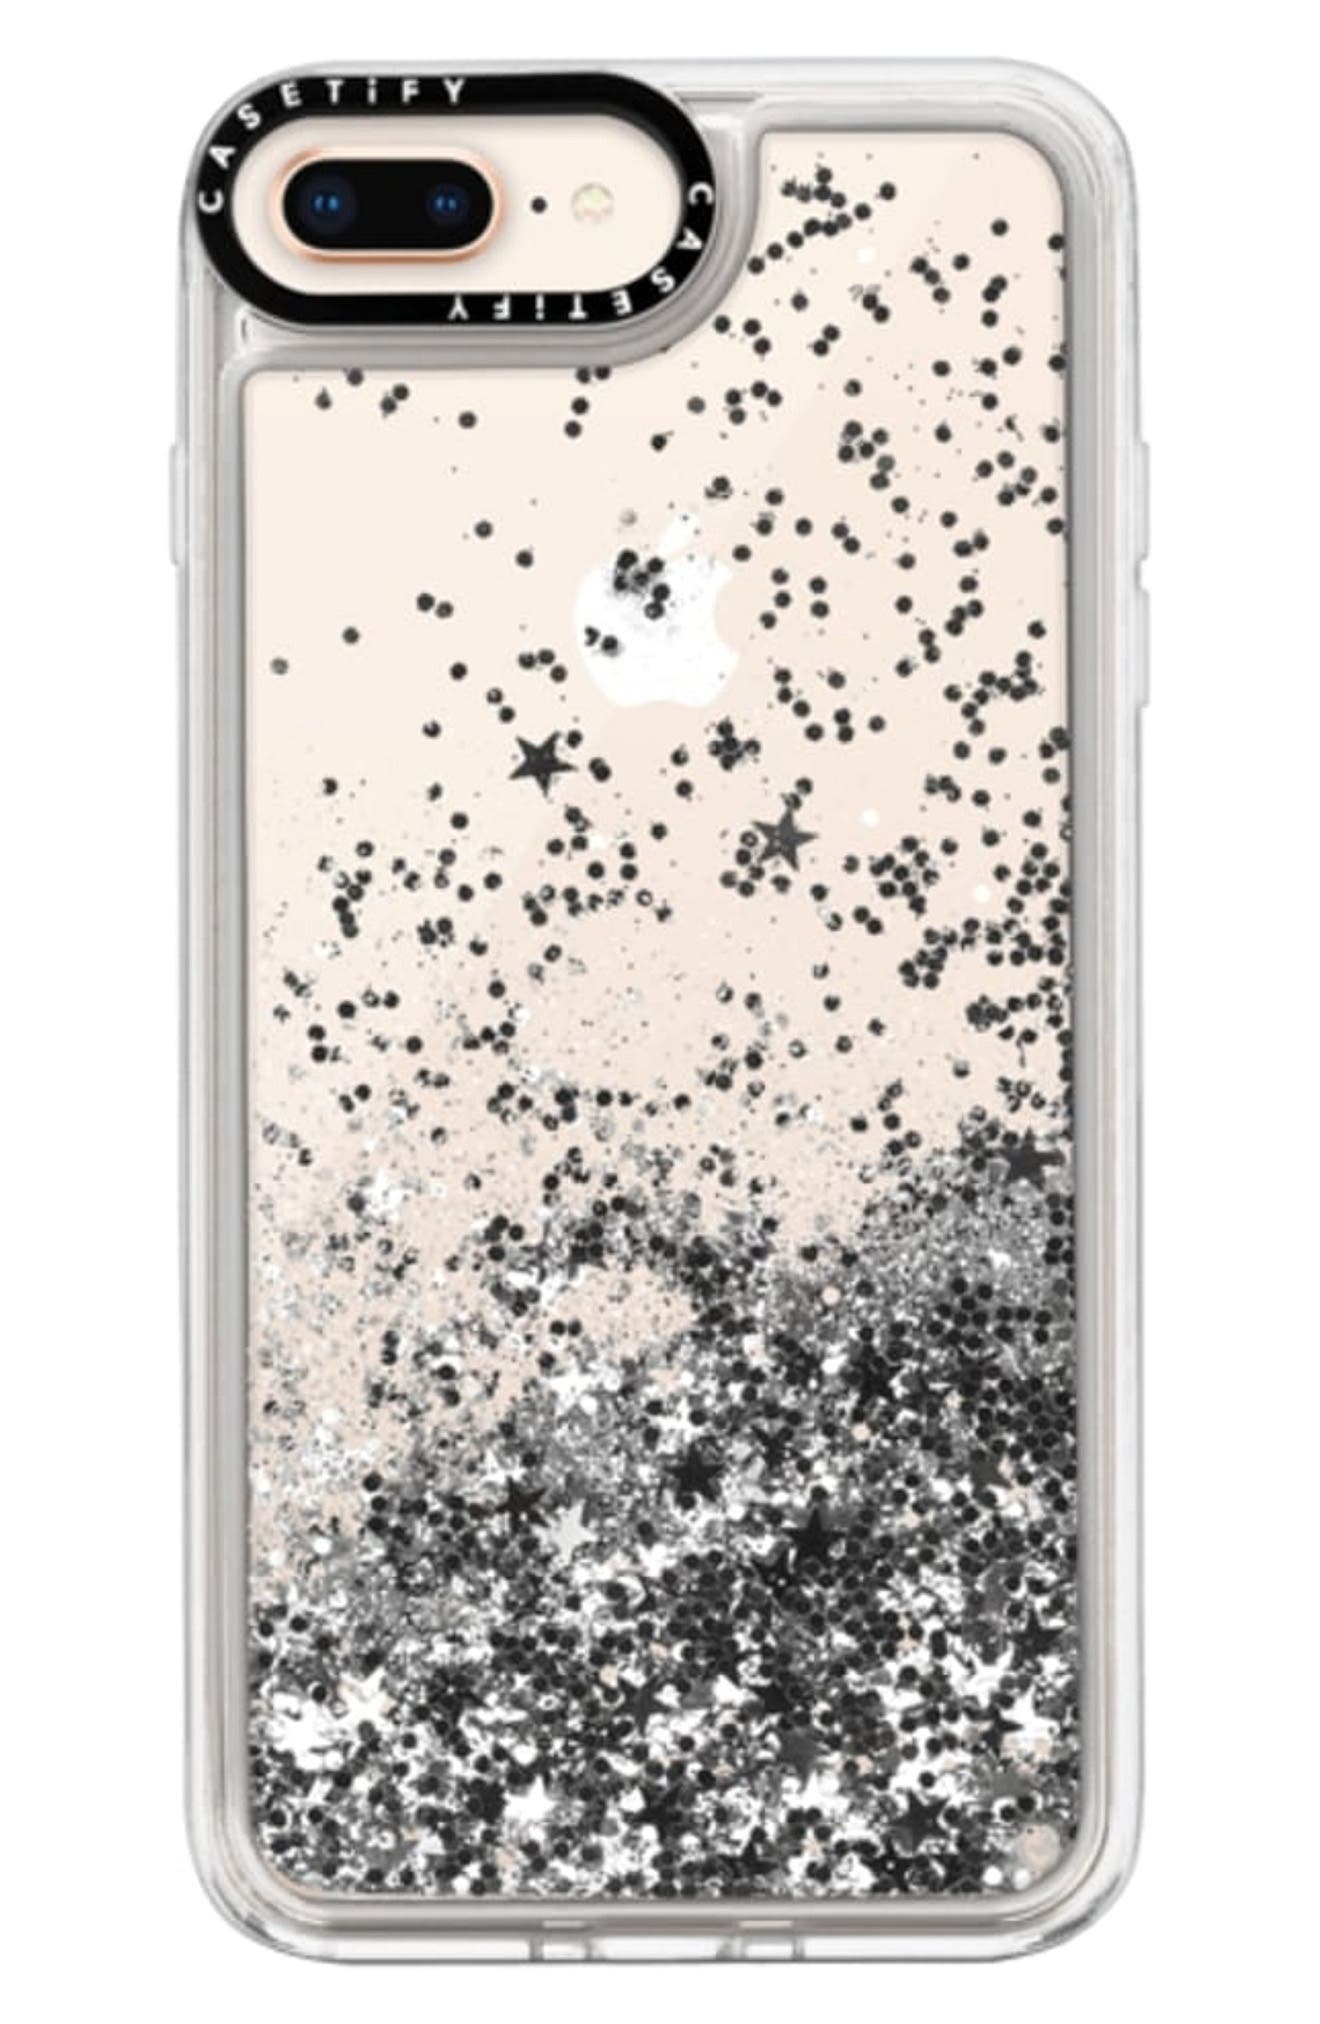 CASETiFY Glitter iPhone 7/8 Plus Case in Unicorn Glitter at Nordstrom